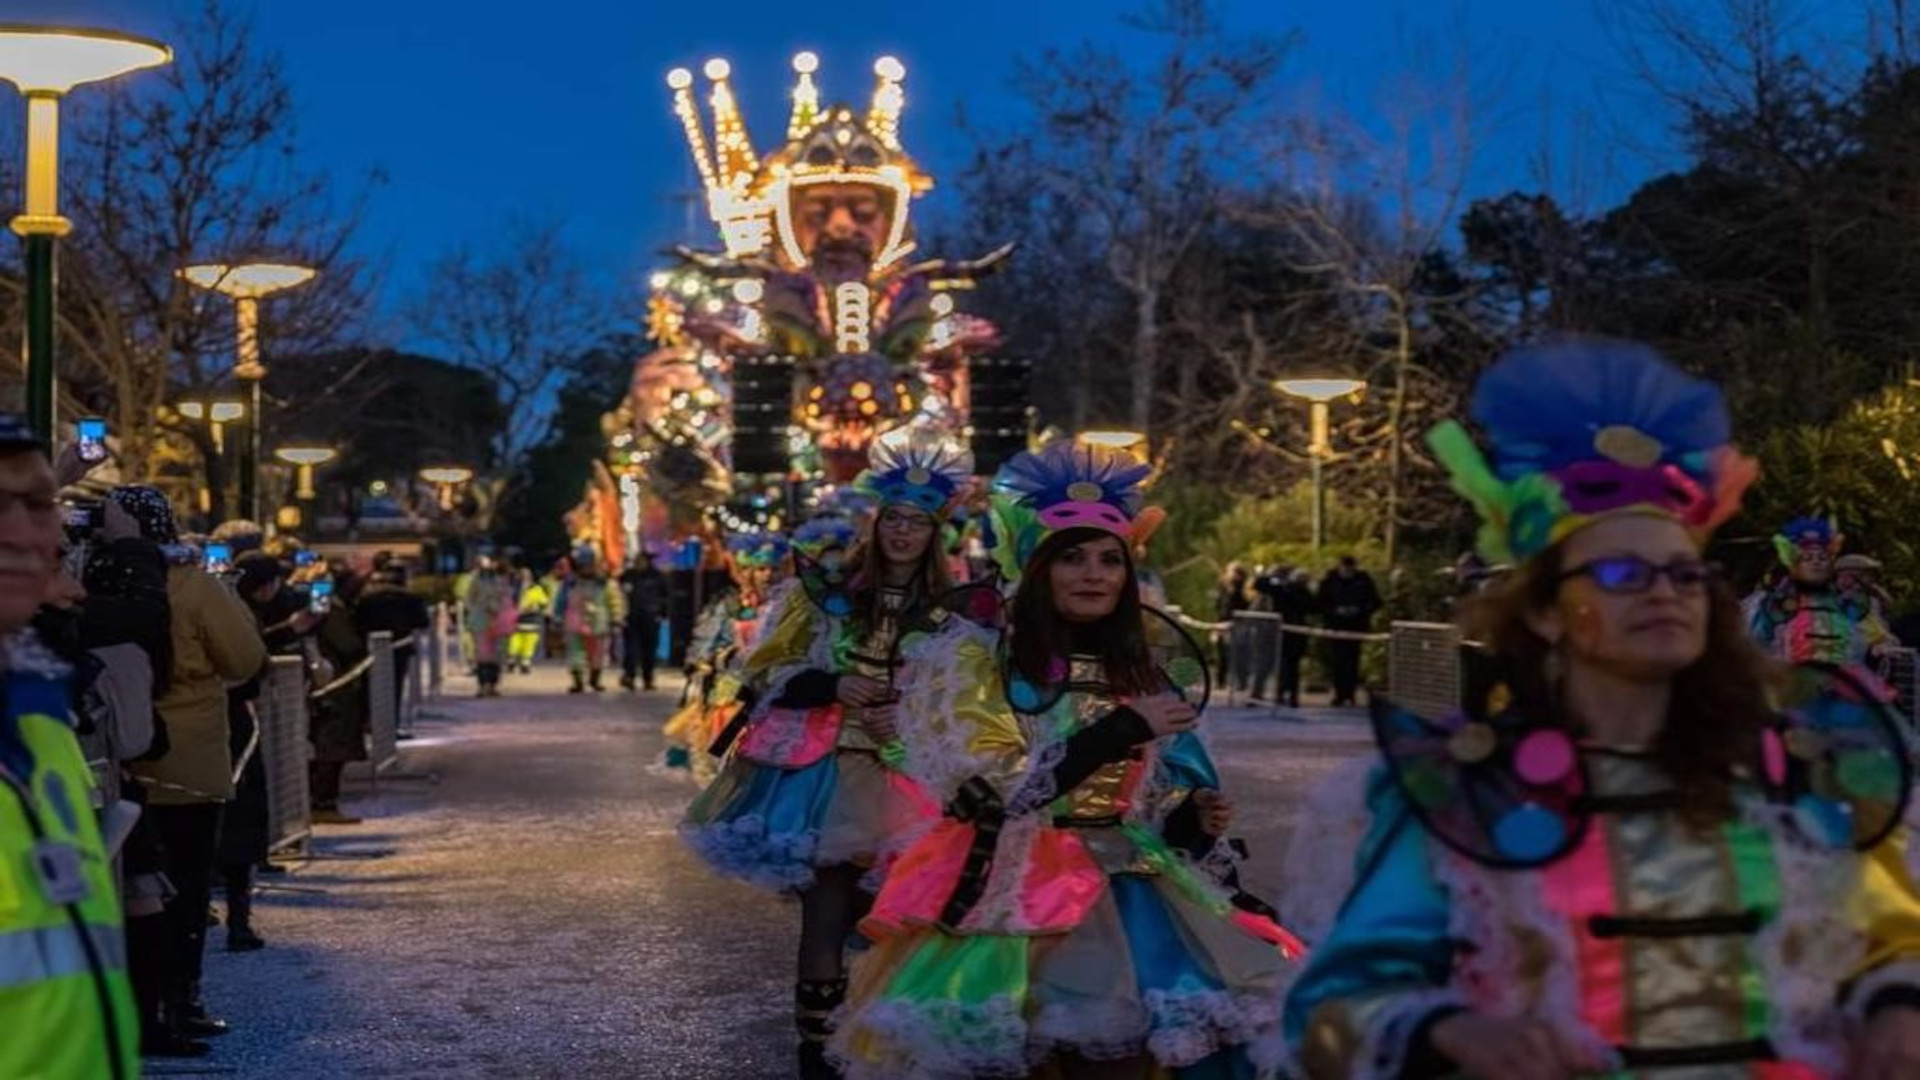 Carnevale di Venezia magia tra maschere e tradizioni